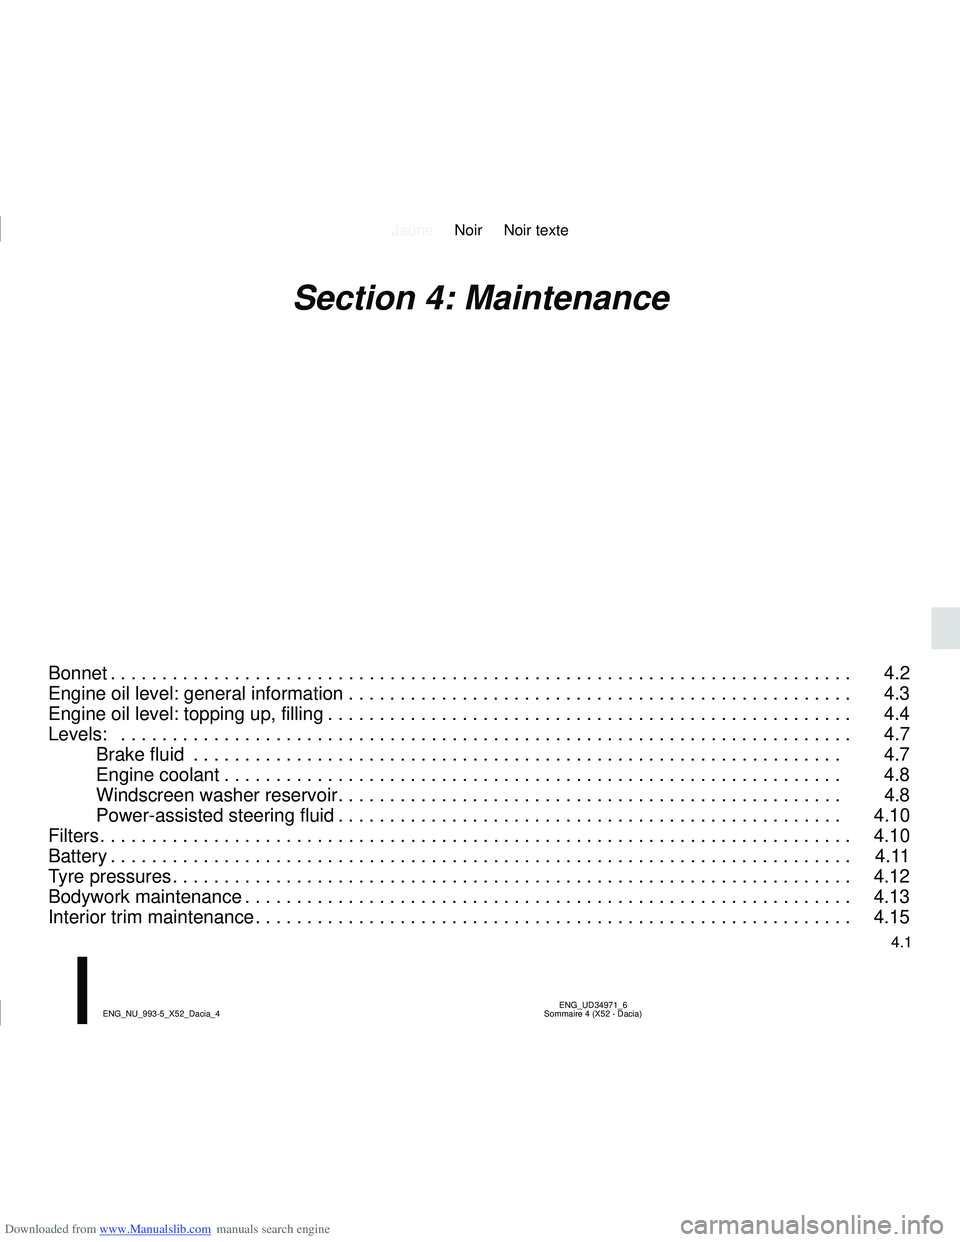 DACIA LOGAN 2015  Owners Manual Downloaded from www.Manualslib.com manuals search engine JauneNoir Noir texte
4.1
ENG_UD34971_6
Sommaire 4 (X52 - Dacia)
ENG_NU_993-5_X52_Dacia_4
Section 4: Maintenance
Bonnet . . . . . . . . . . . . 